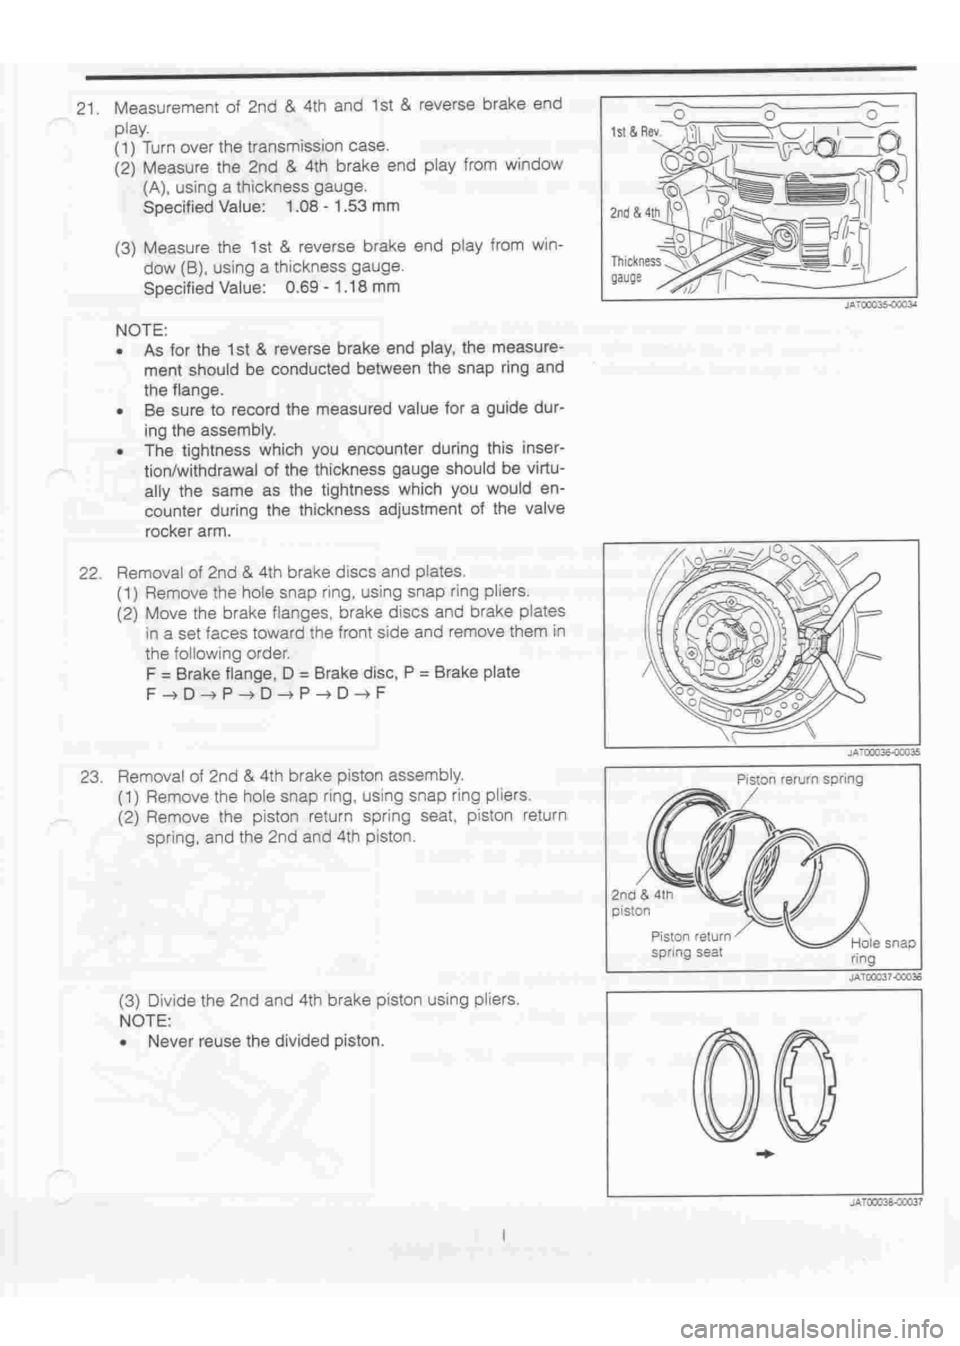 DAIHATSU TERIOS 2000  Service Owners Manual 
 
www.WorkshopManuals.co.uk

 
Purchased from www.WorkshopManuals.co.uk 